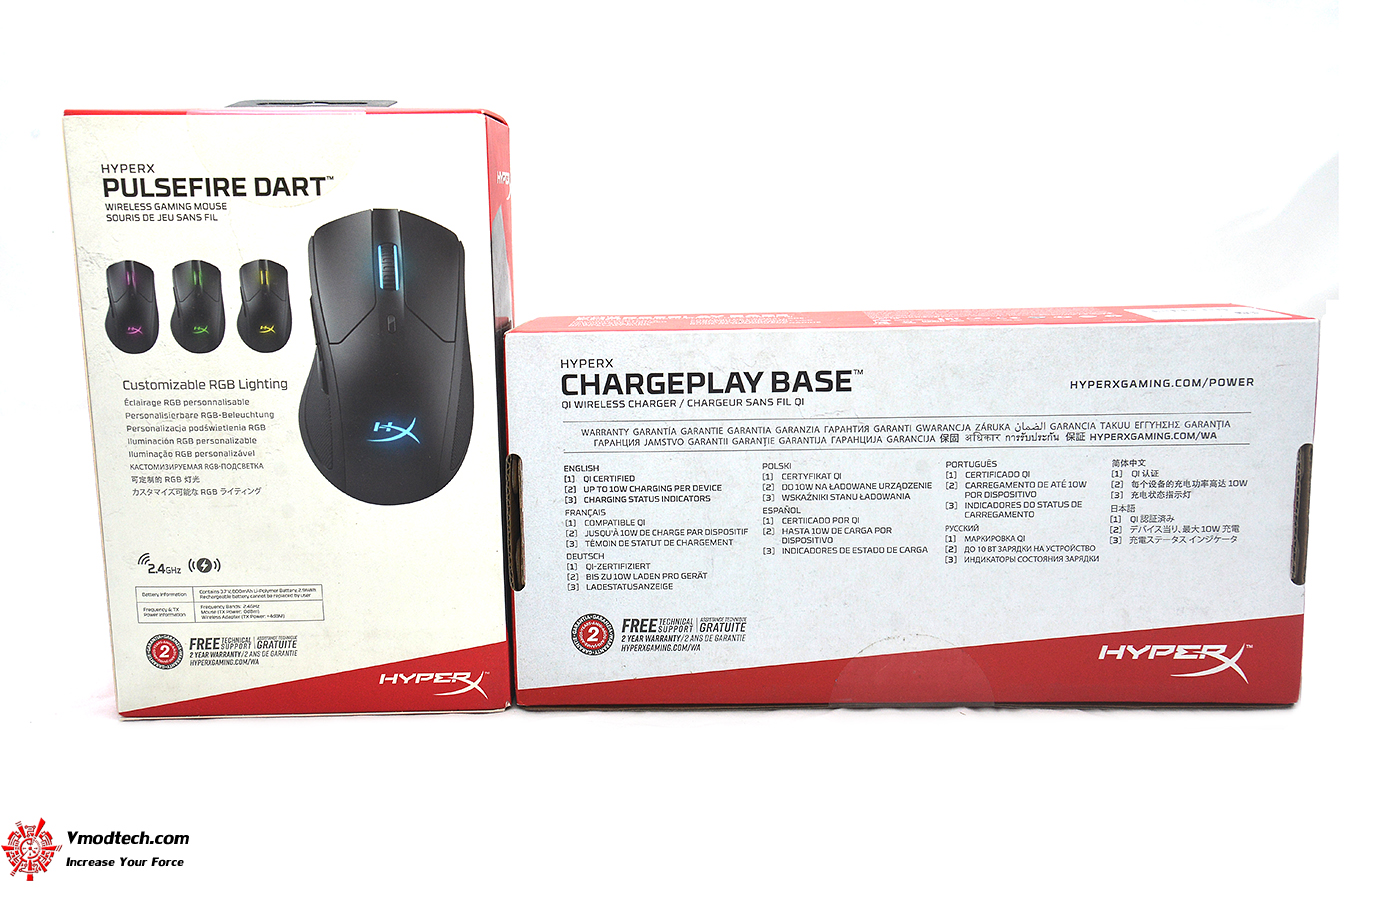 dsc 9457 HyperX Pulsefire Dart Wireless Gaming Mouse Review